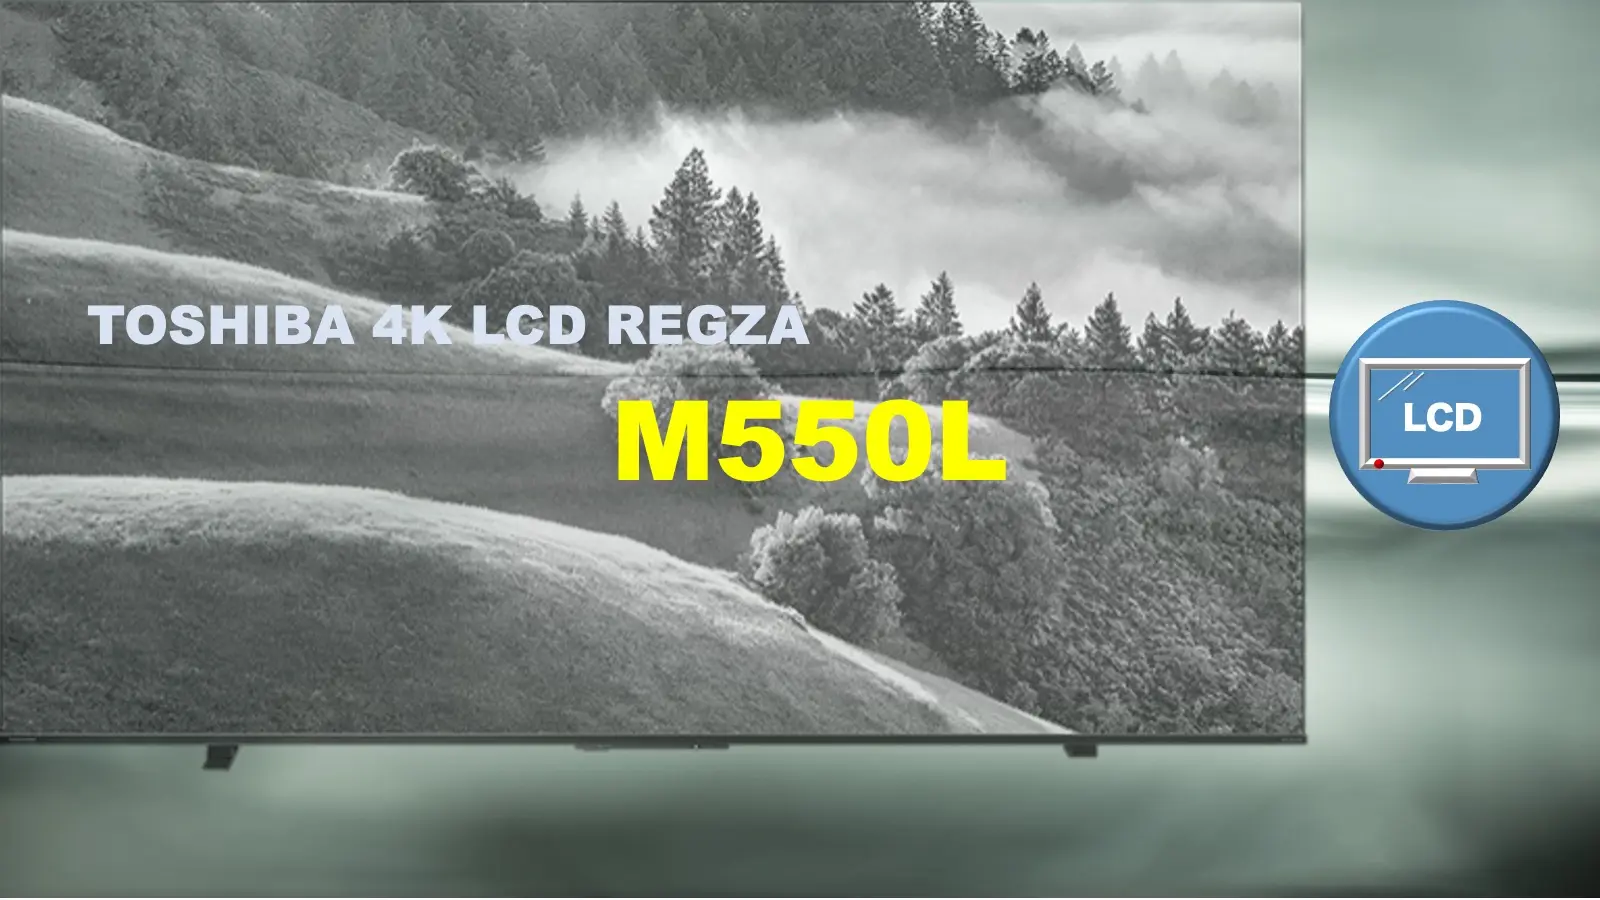 TVS(東芝) REGZA 4K液晶レグザ M550Lレビュー記事用のオリジナルアイキャッチ画像